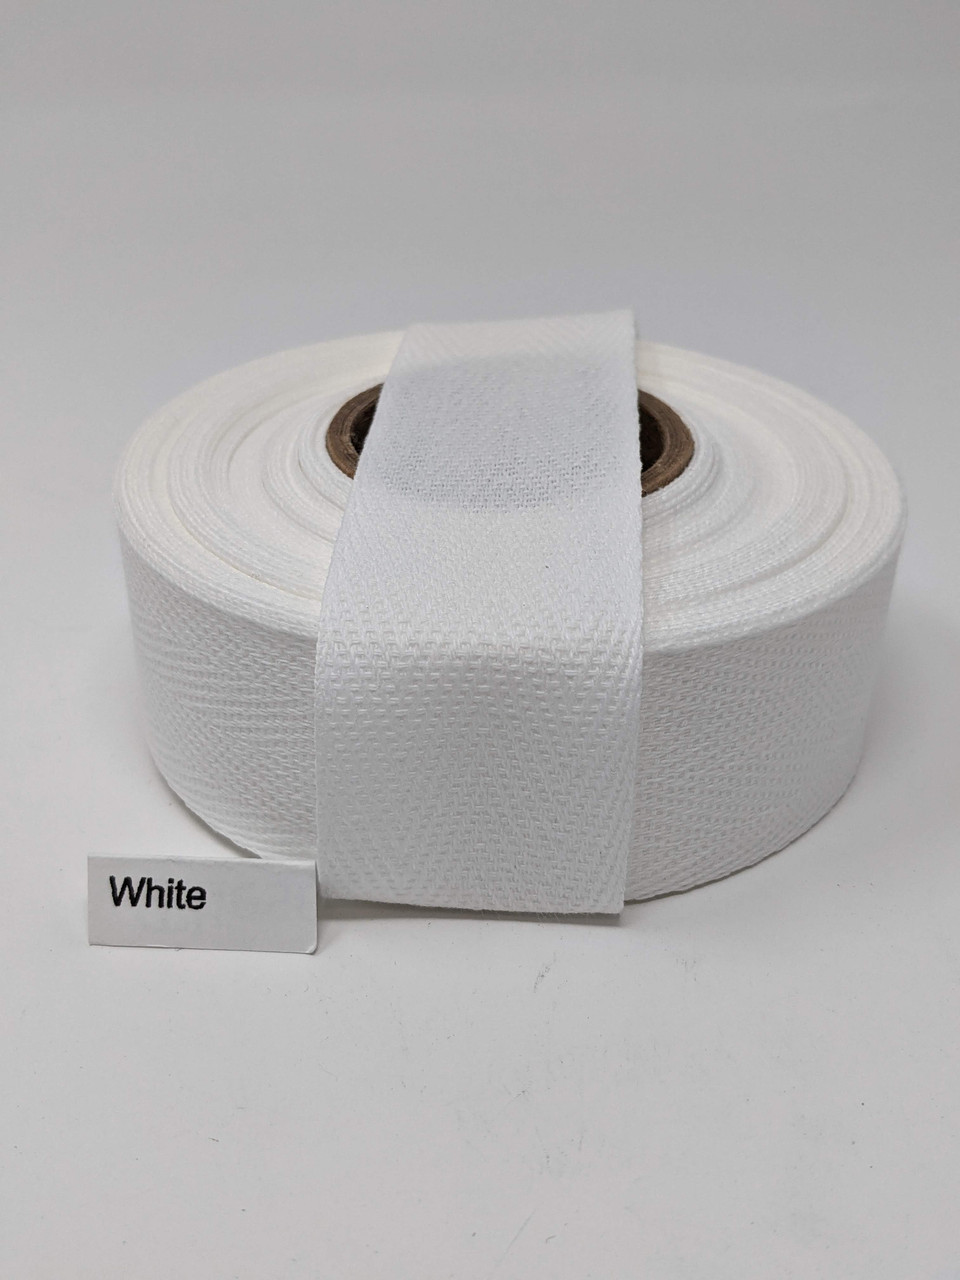 Cotton Twill Tape 1.25 White, 10 yard roll